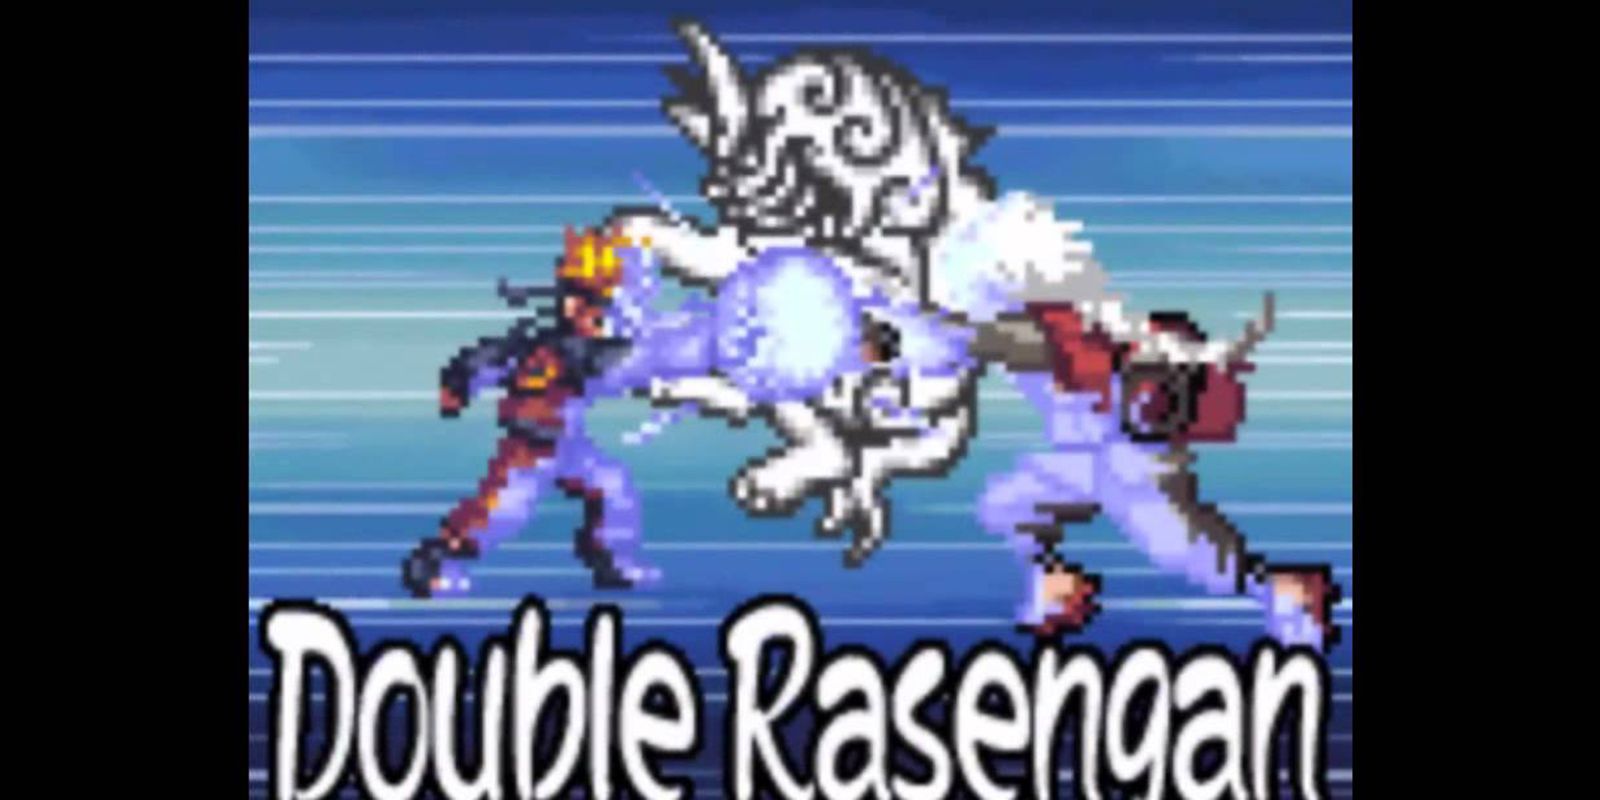 Naruto and Jiraiya clashing their rasengans, producing a "Double Rasengan" screen.